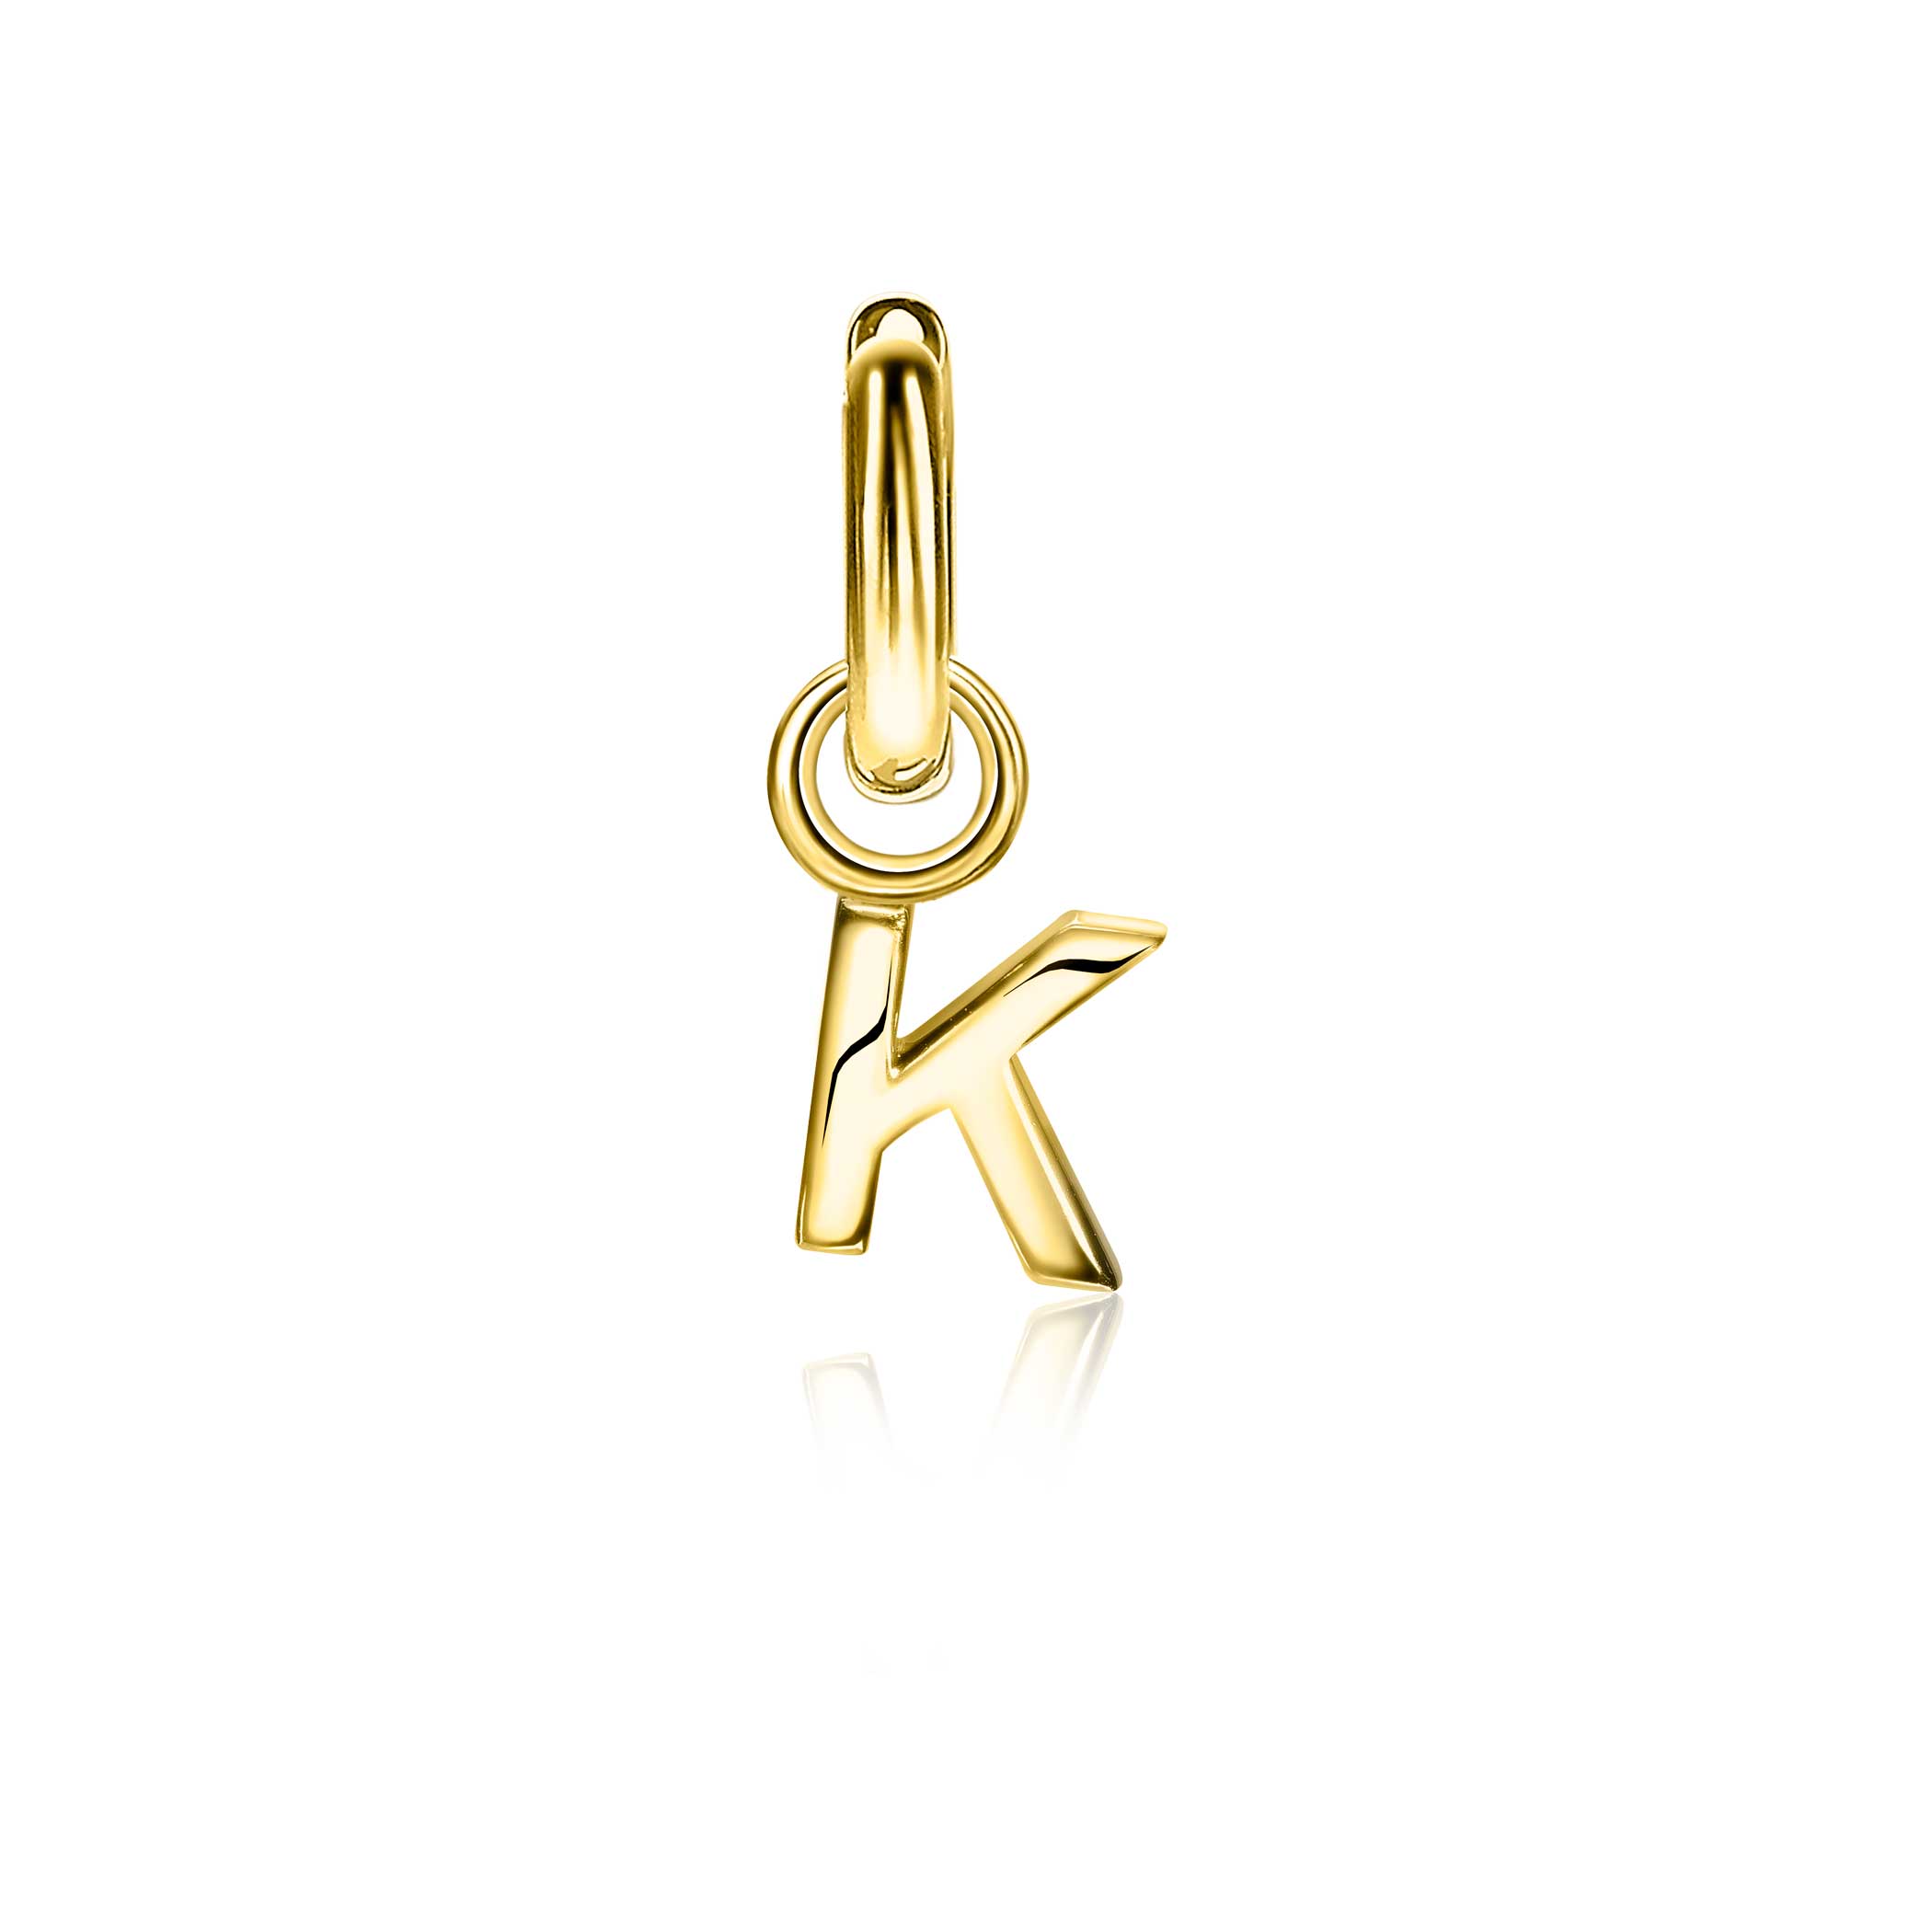 ZINZI Gold Plated Letter Earrings Pendant K price per piece ZICH2145K (excl. hoop earrings)